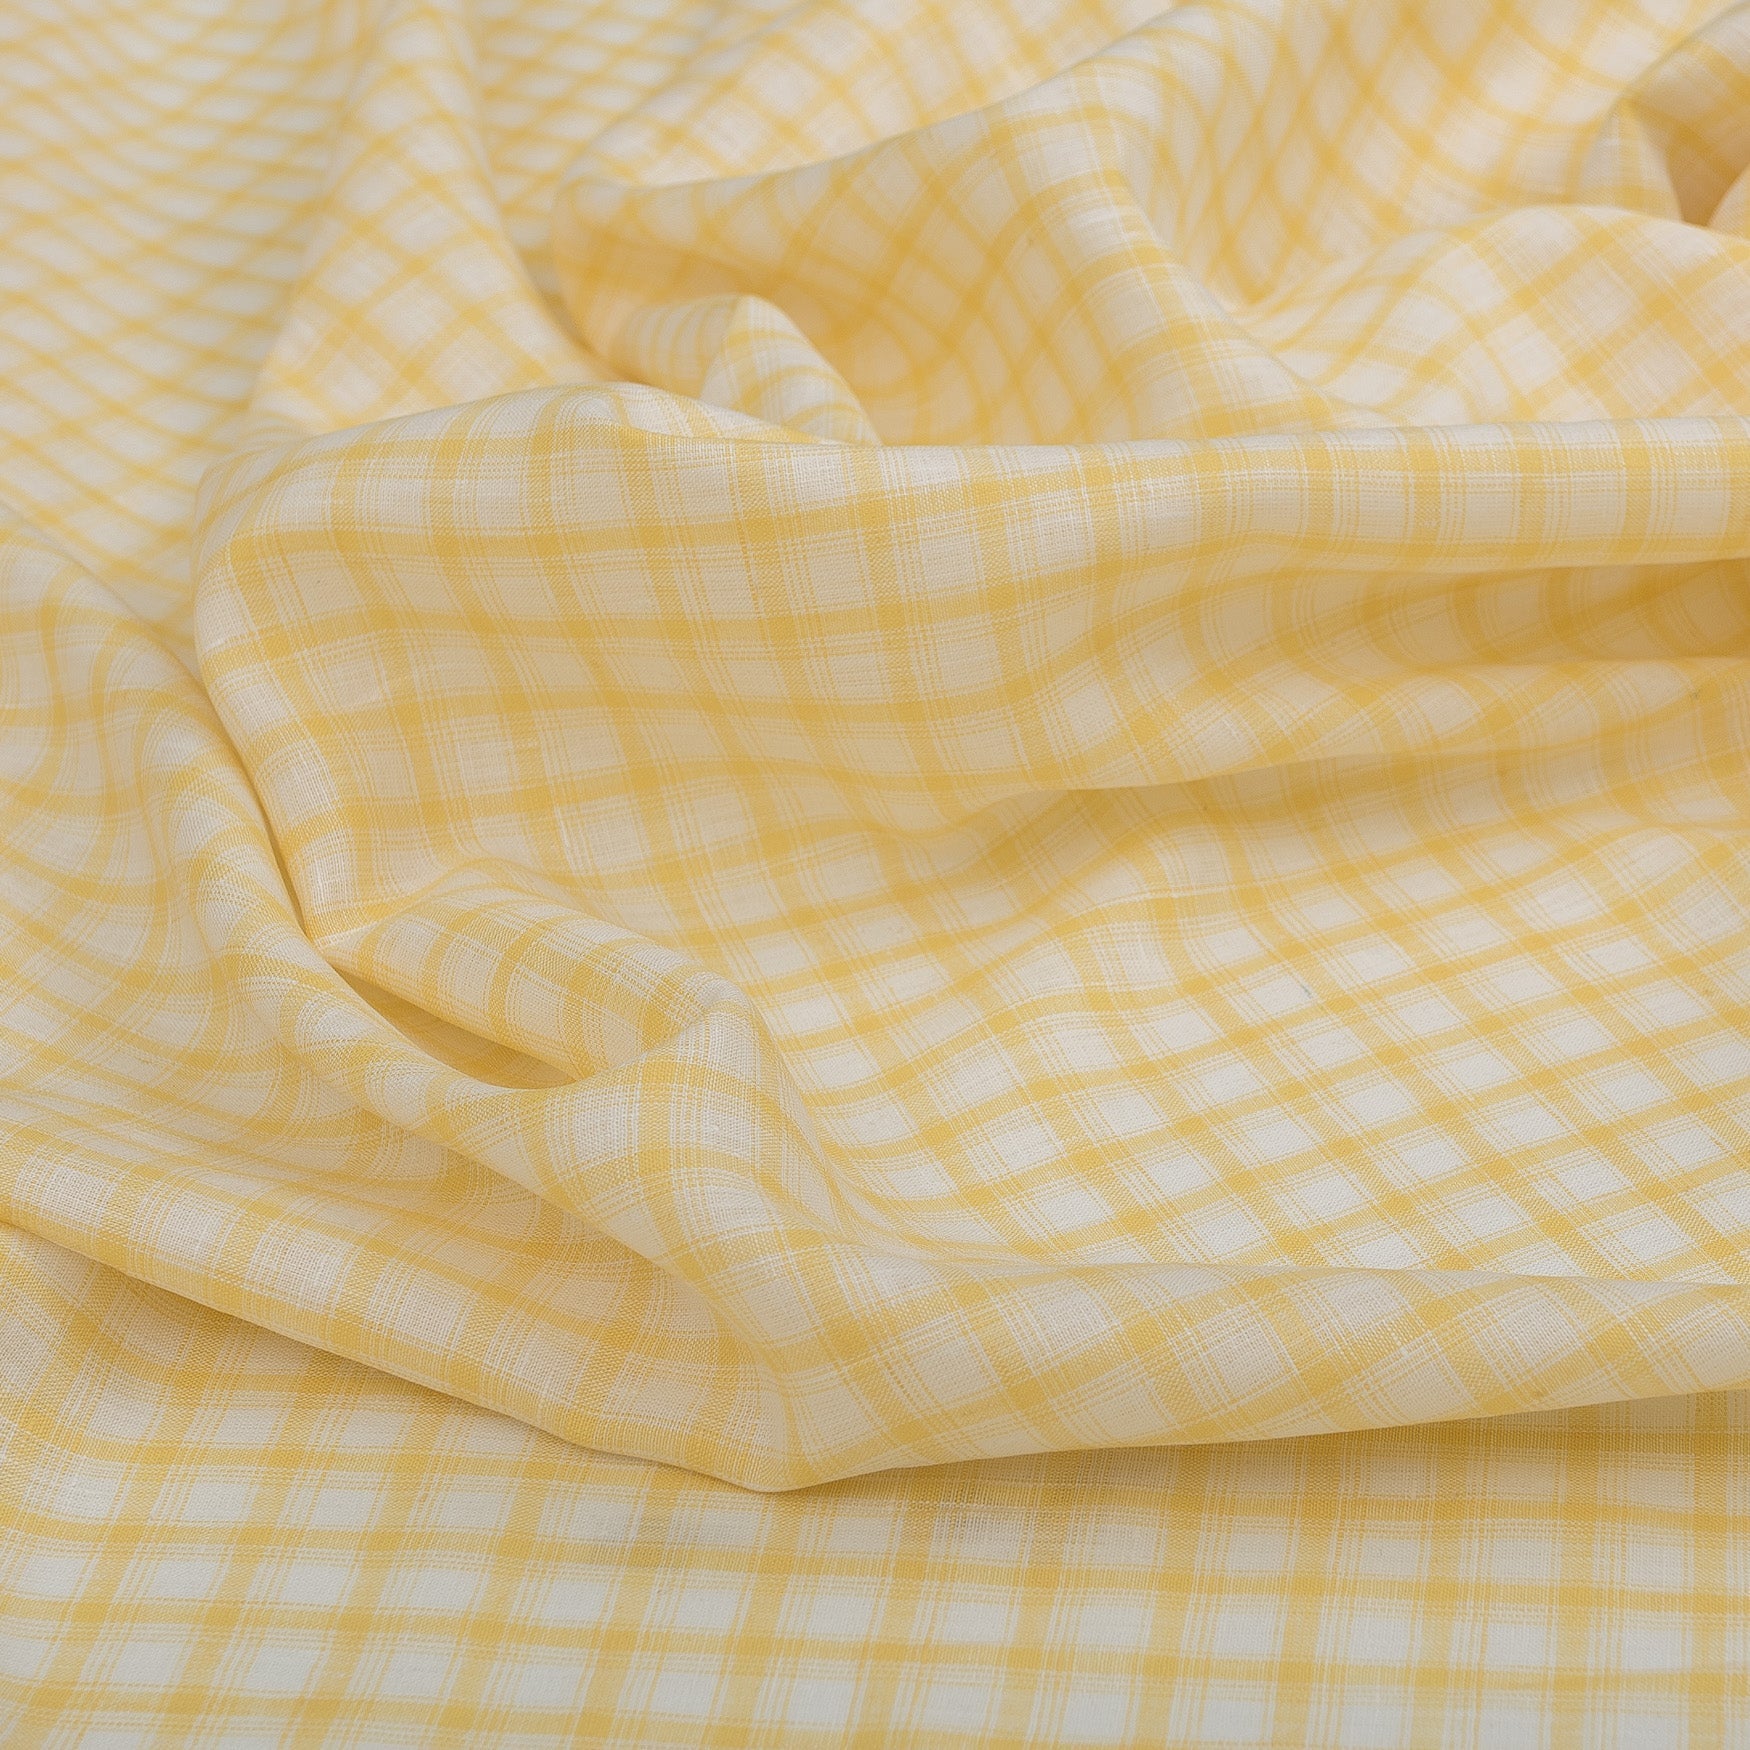 Sunny Check 100% Linen Fabric